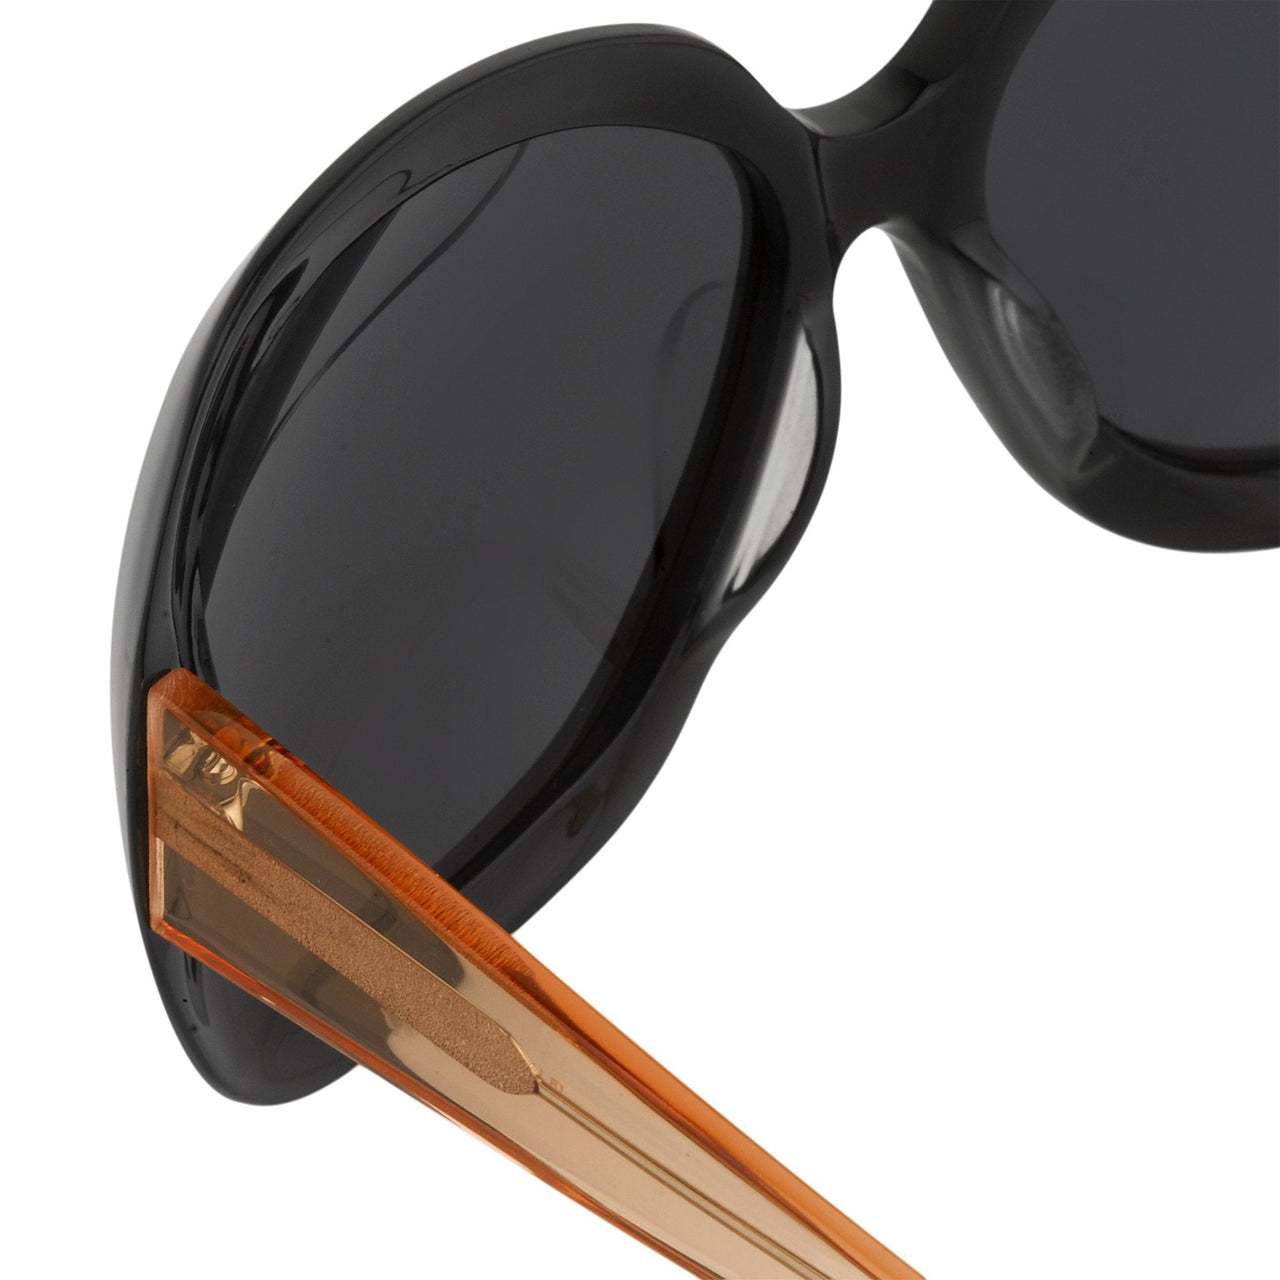 Rue De Mail Sunglasses Oversized Translucent Black with Black Lenses RDM2C2SUN - Watches & Crystals